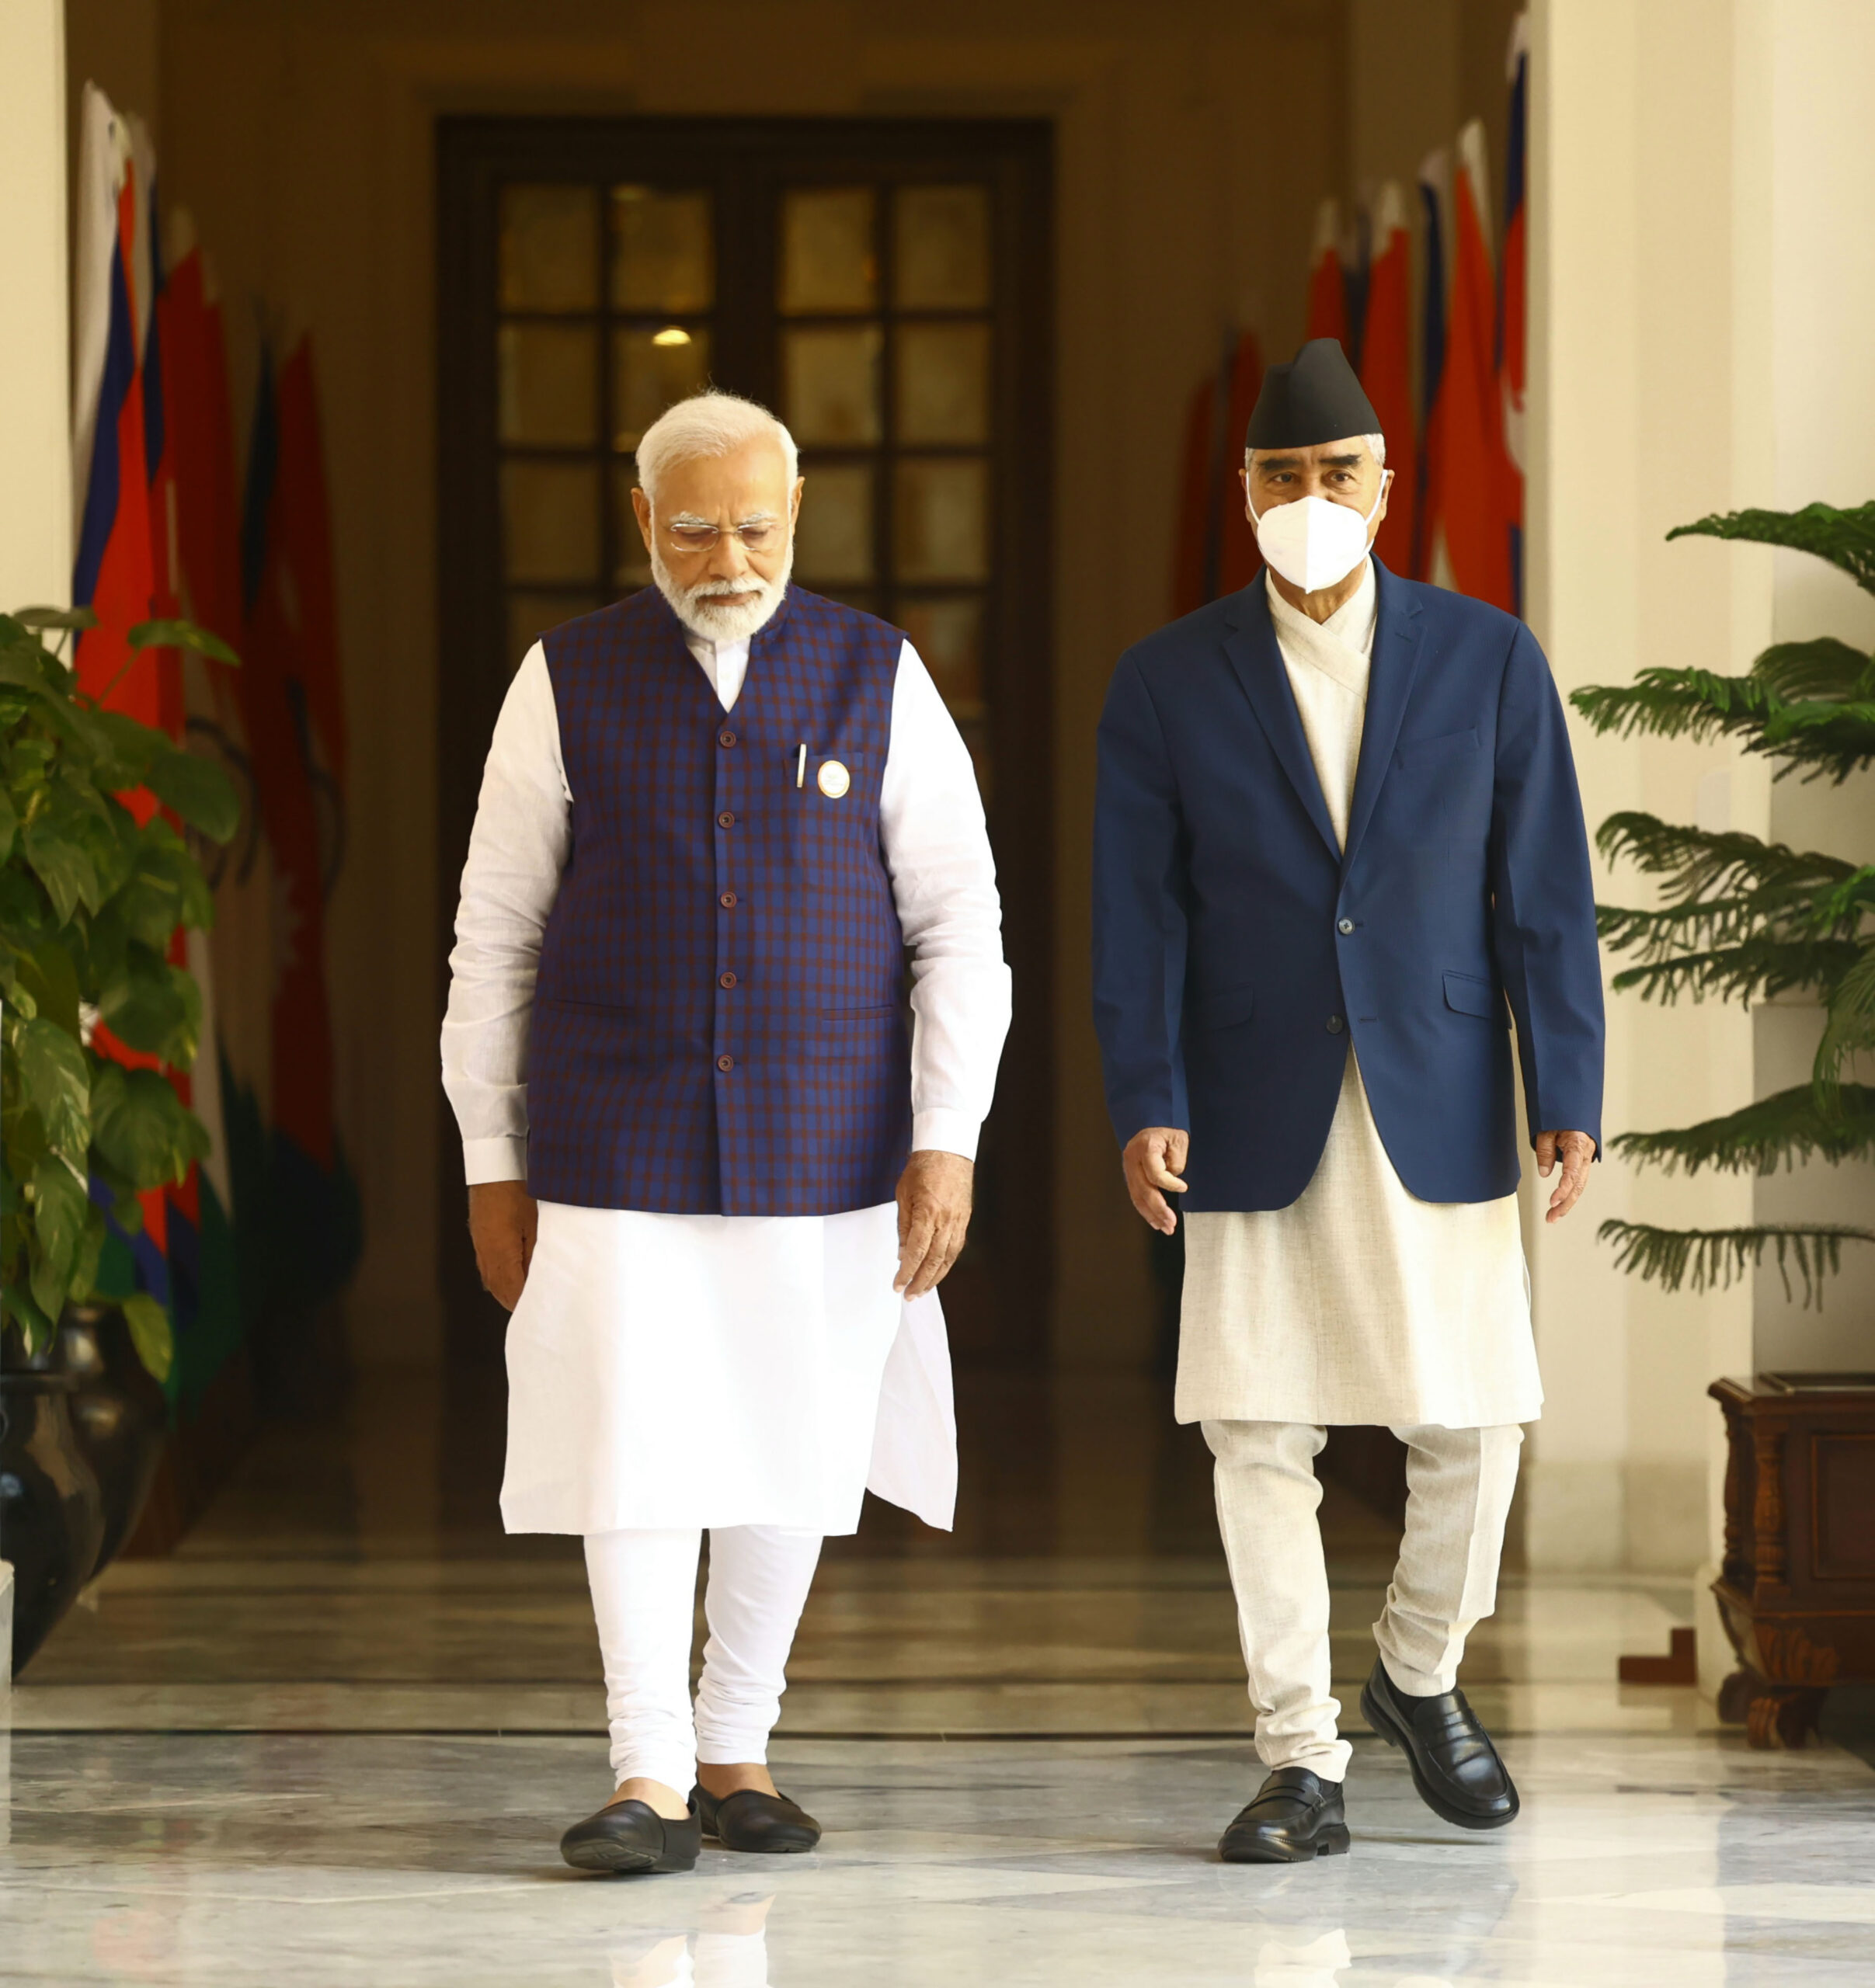 Industrialists, businessmen label Prime Minister Deuba’s India visit productive